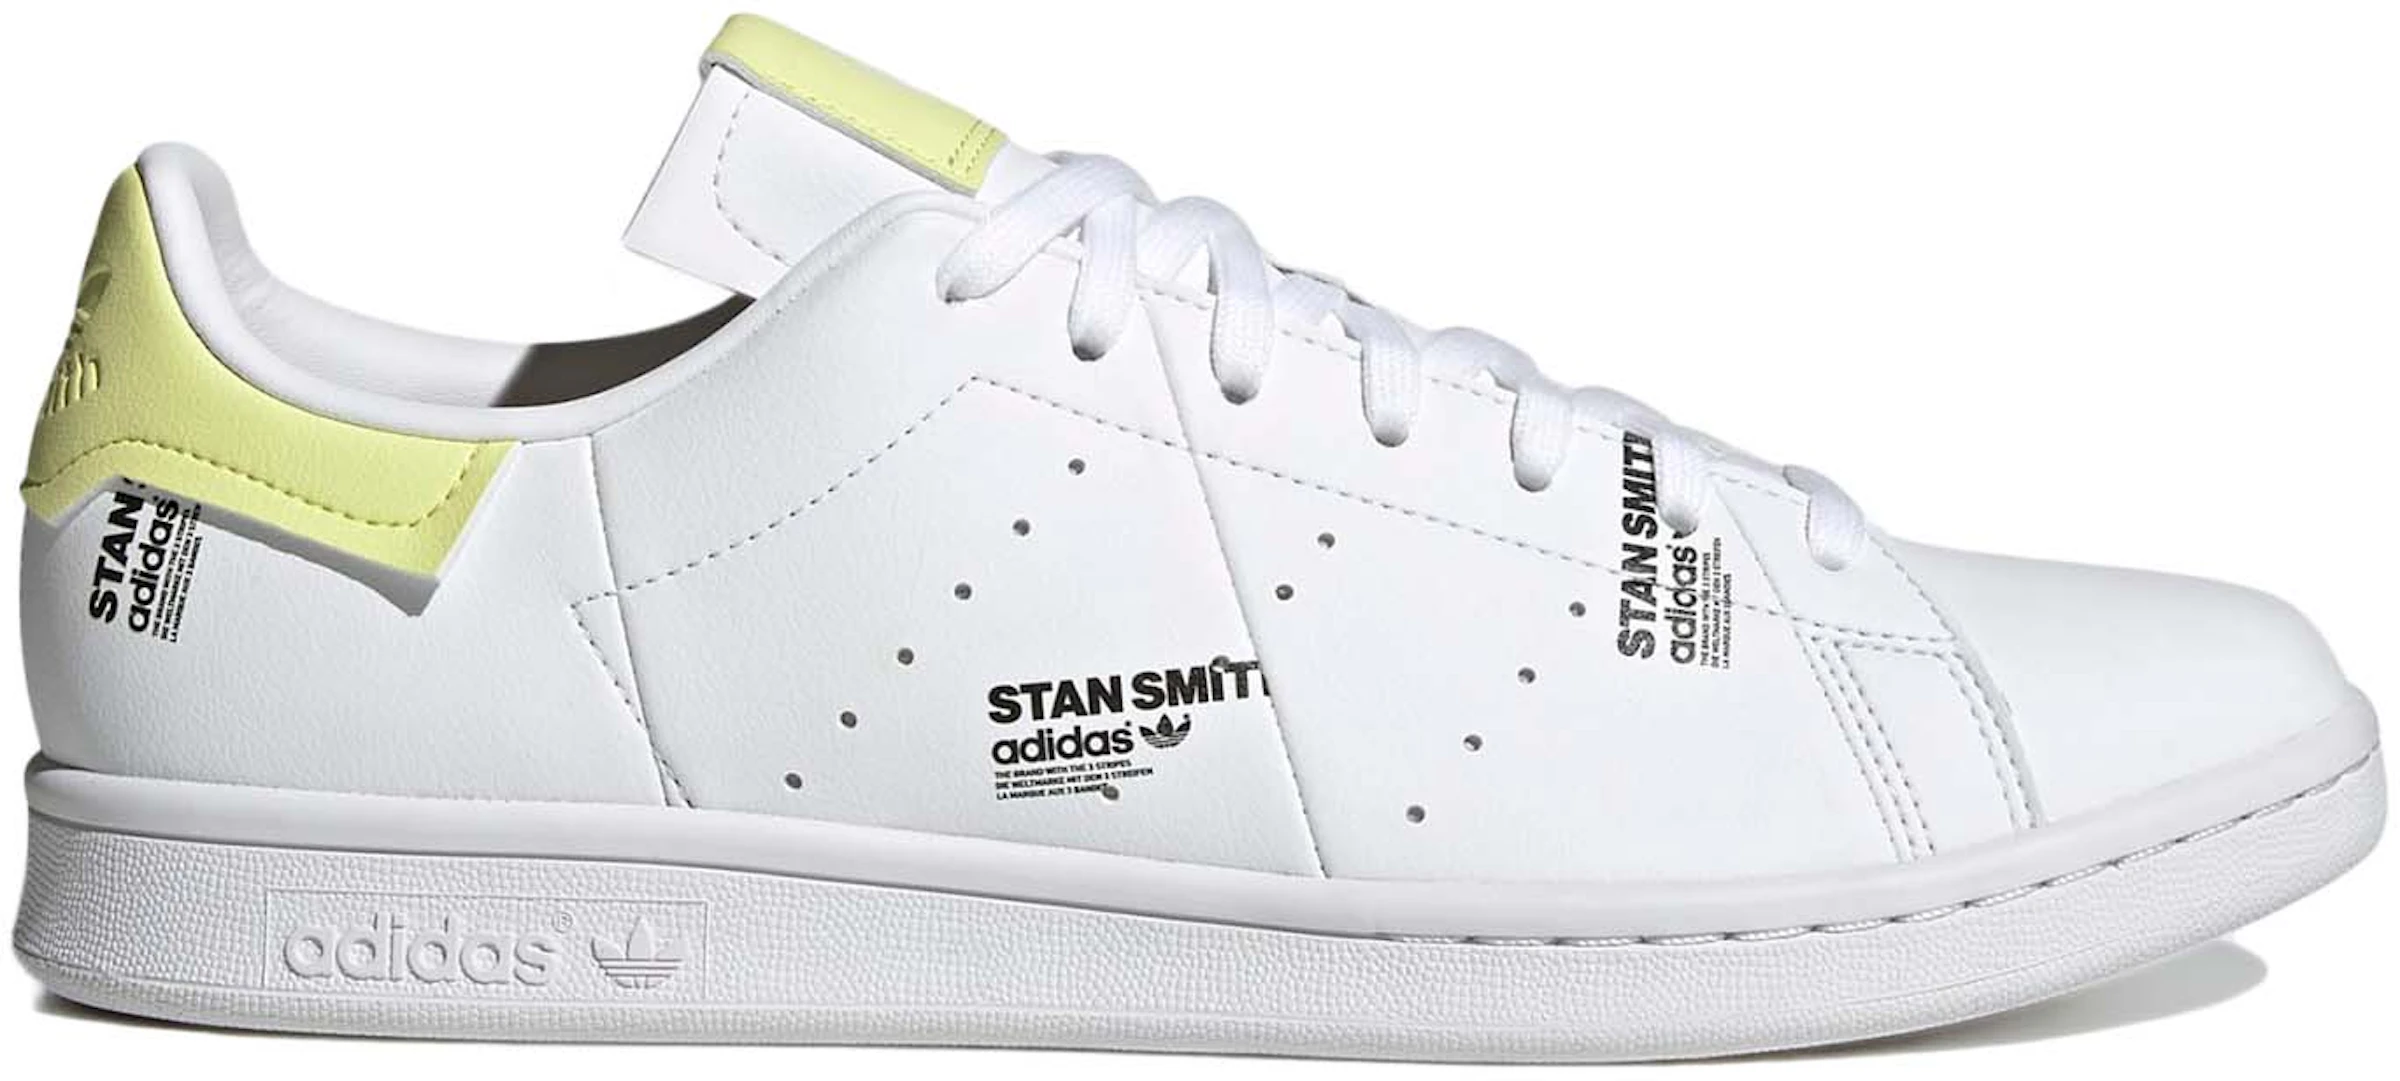 patrouille vraag naar Hoopvol adidas Stan Smith Digital Prints White Pulse Yellow - GV7665 - US